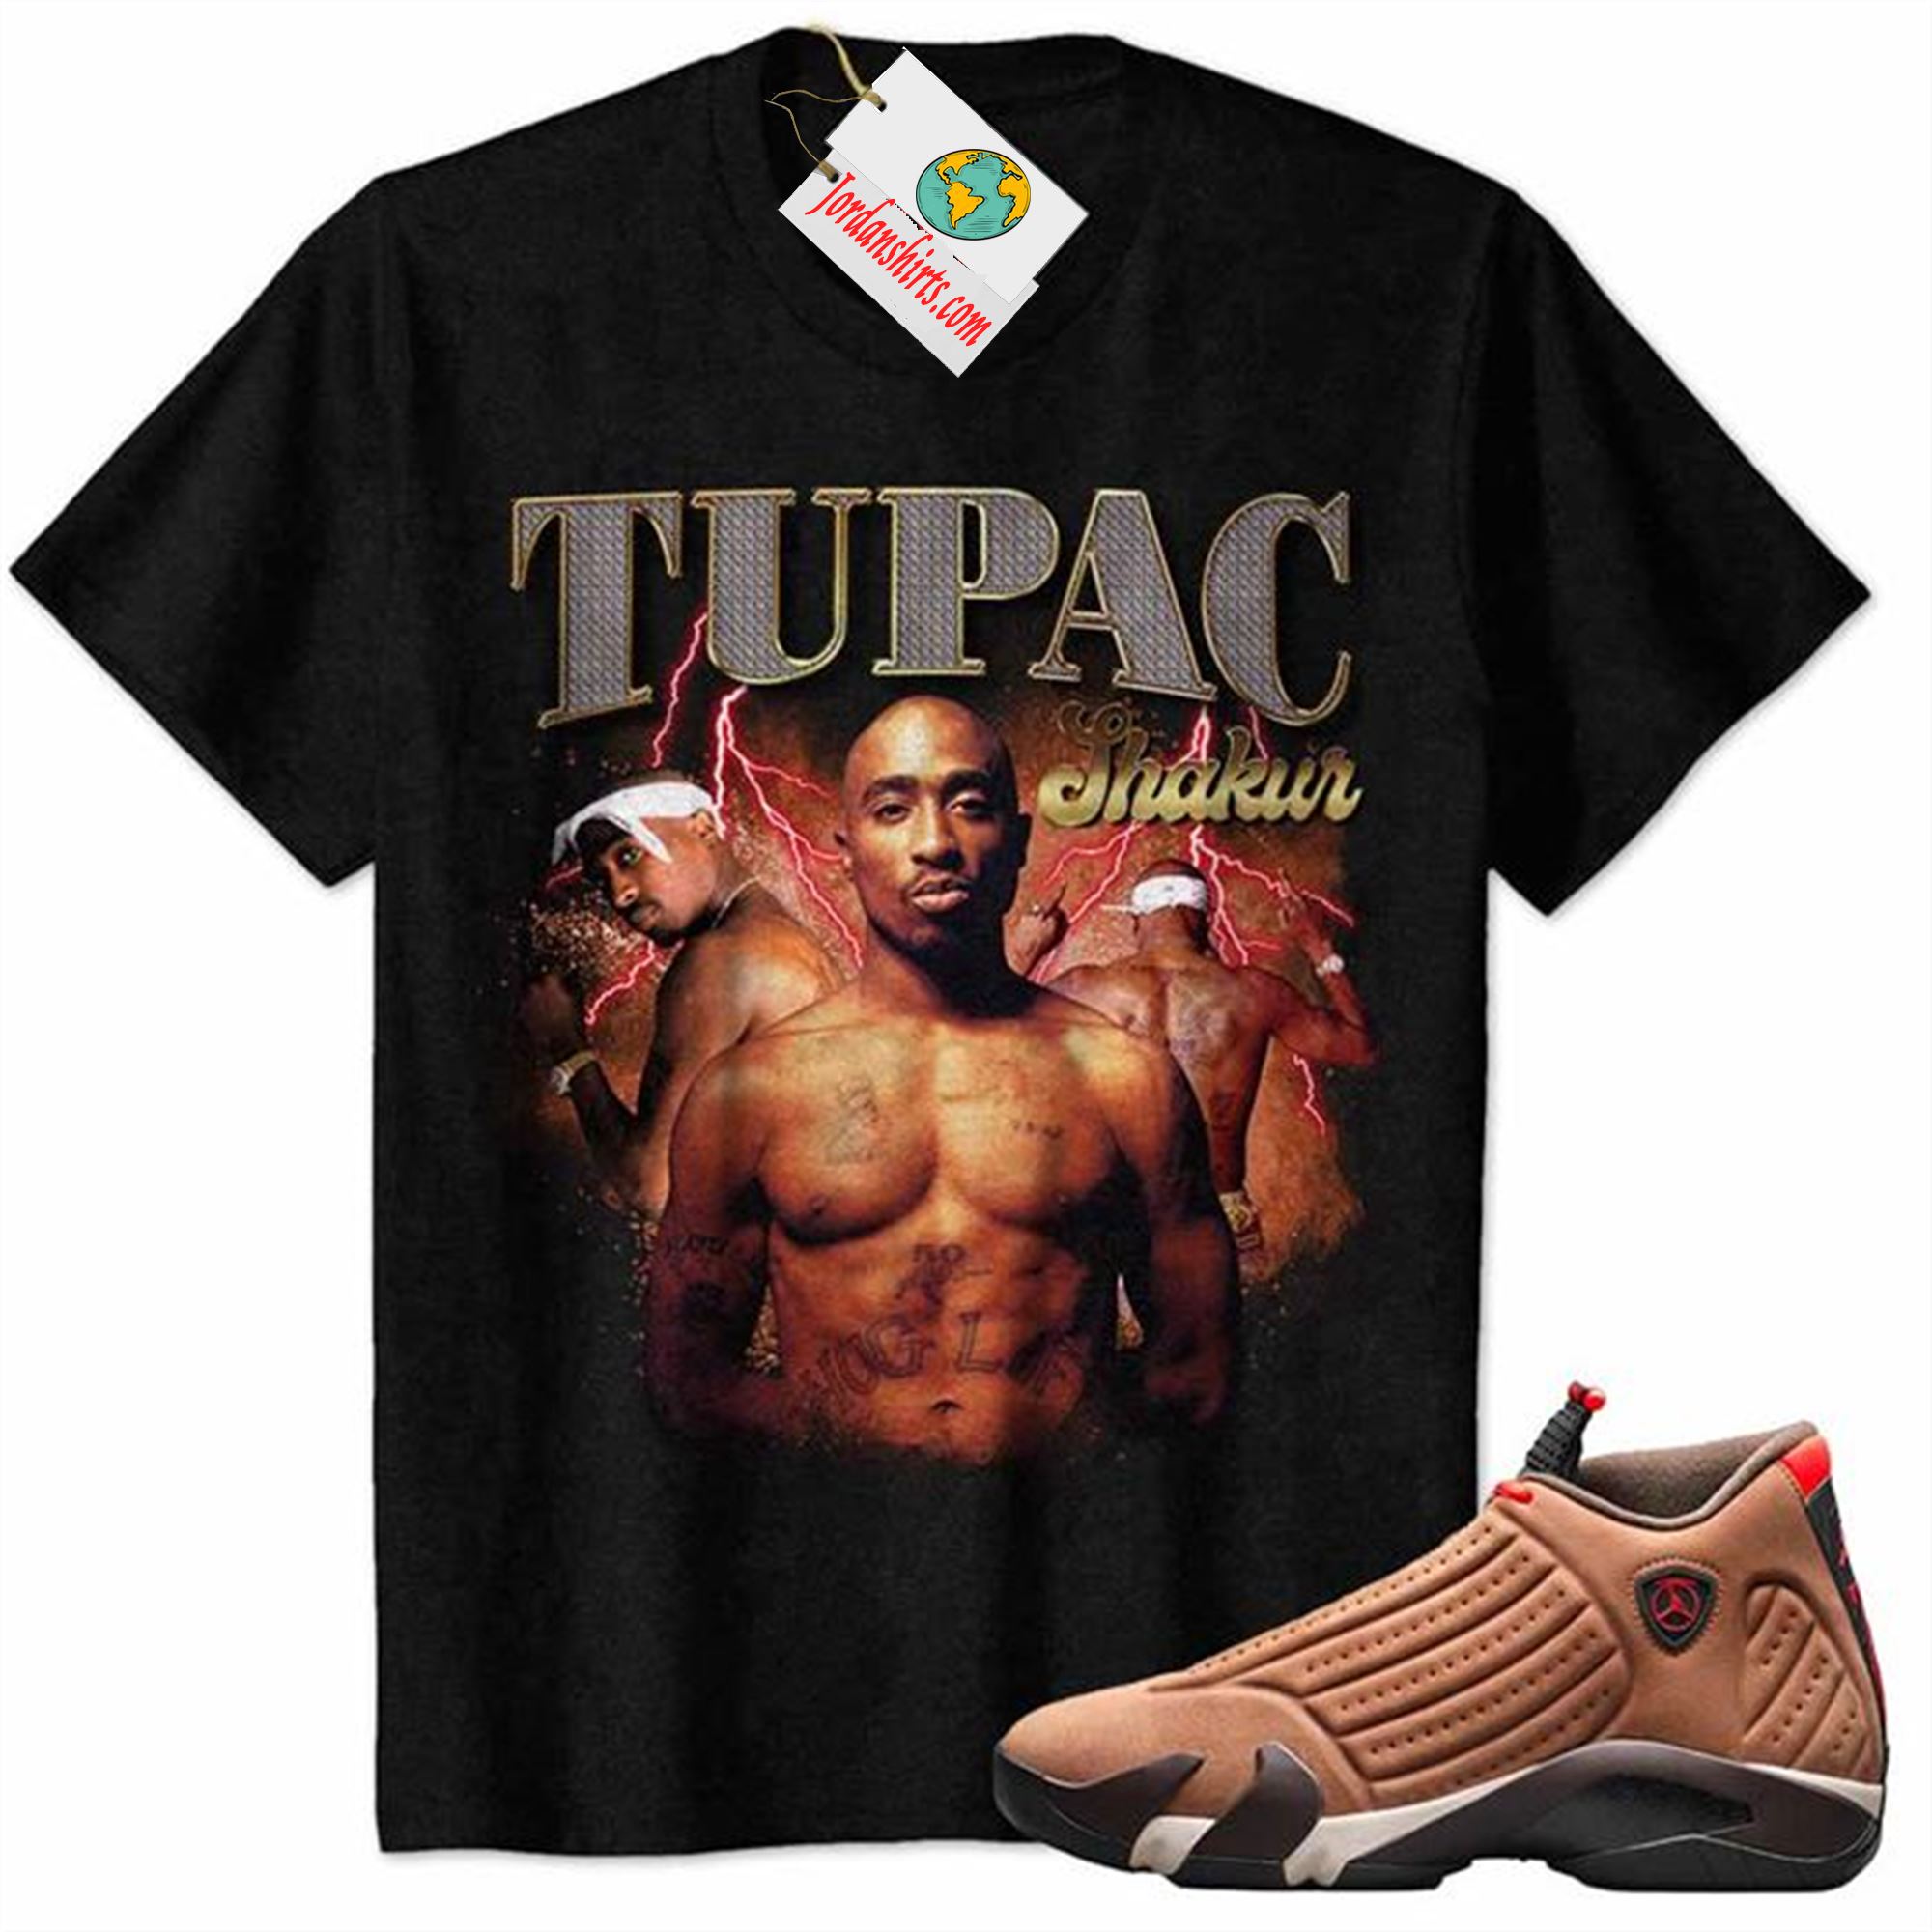 Jordan 14 Shirt, Tupac 2pac Shakur Graphic Black Air Jordan 14 Winterized 14s Plus Size Up To 5xl